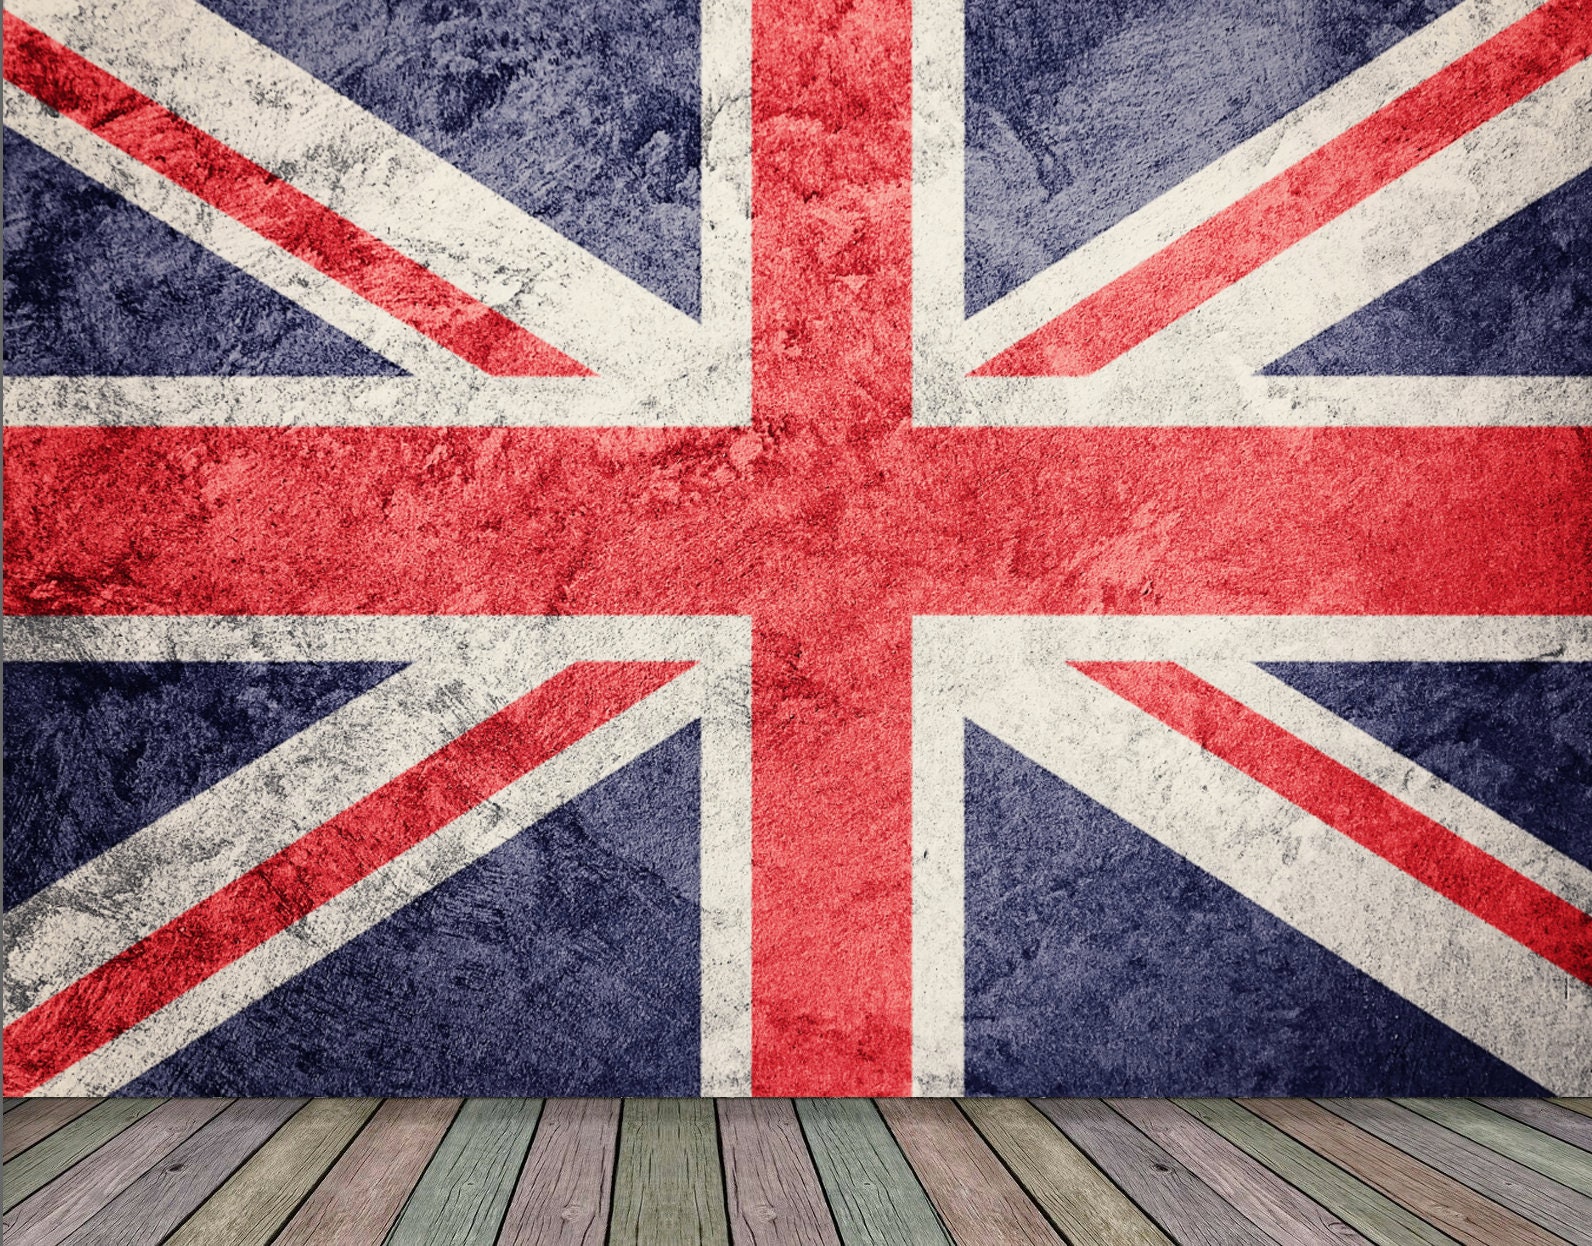 cool british flag effect